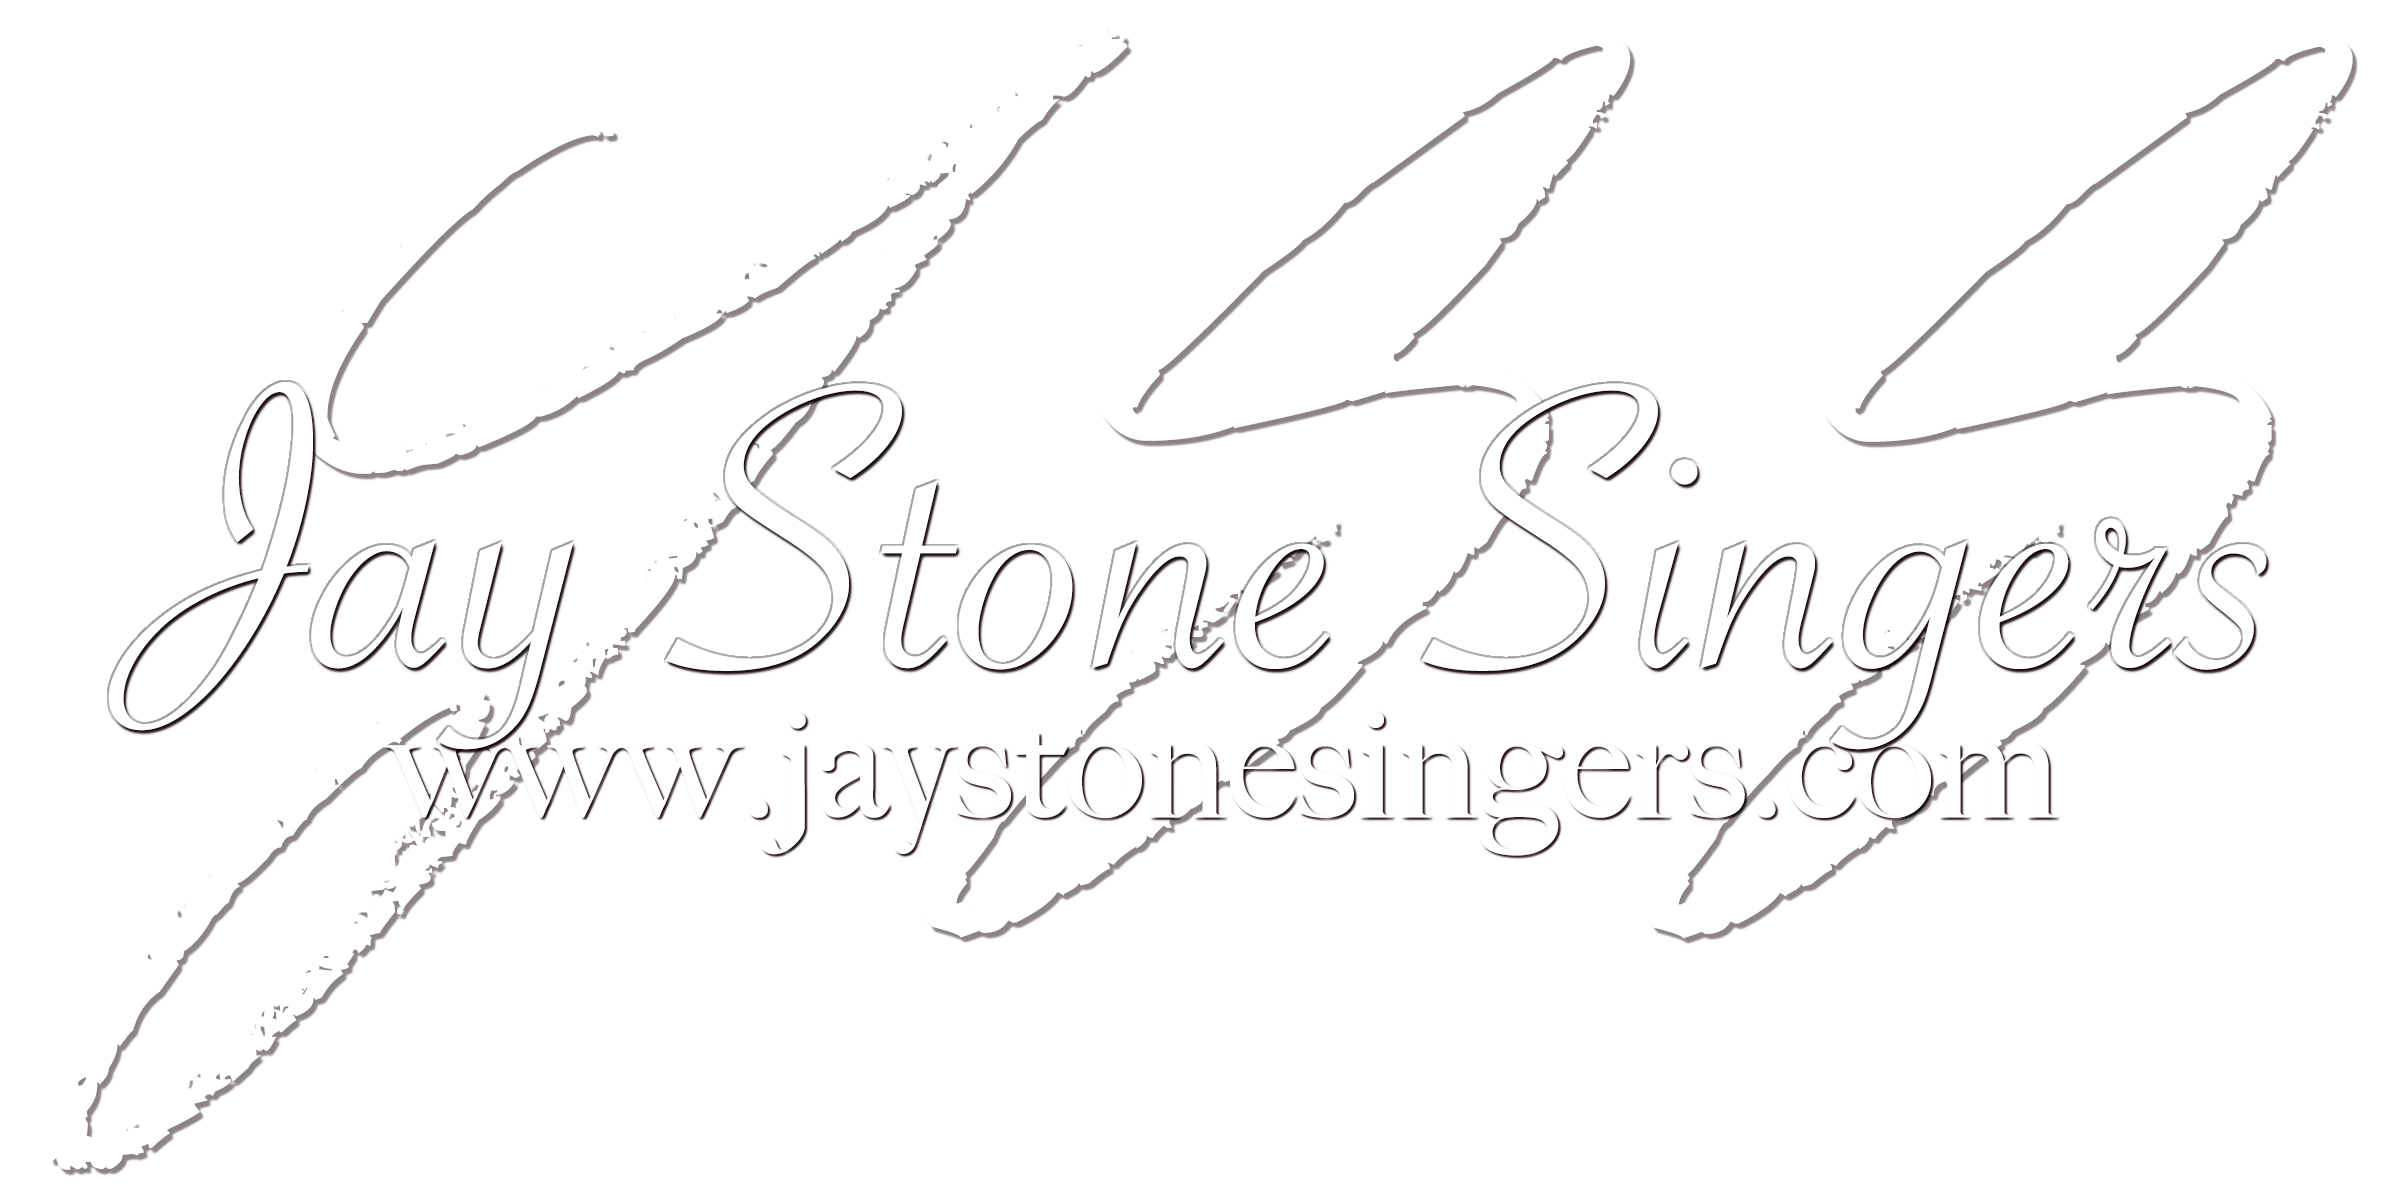 Jay Stone Singers